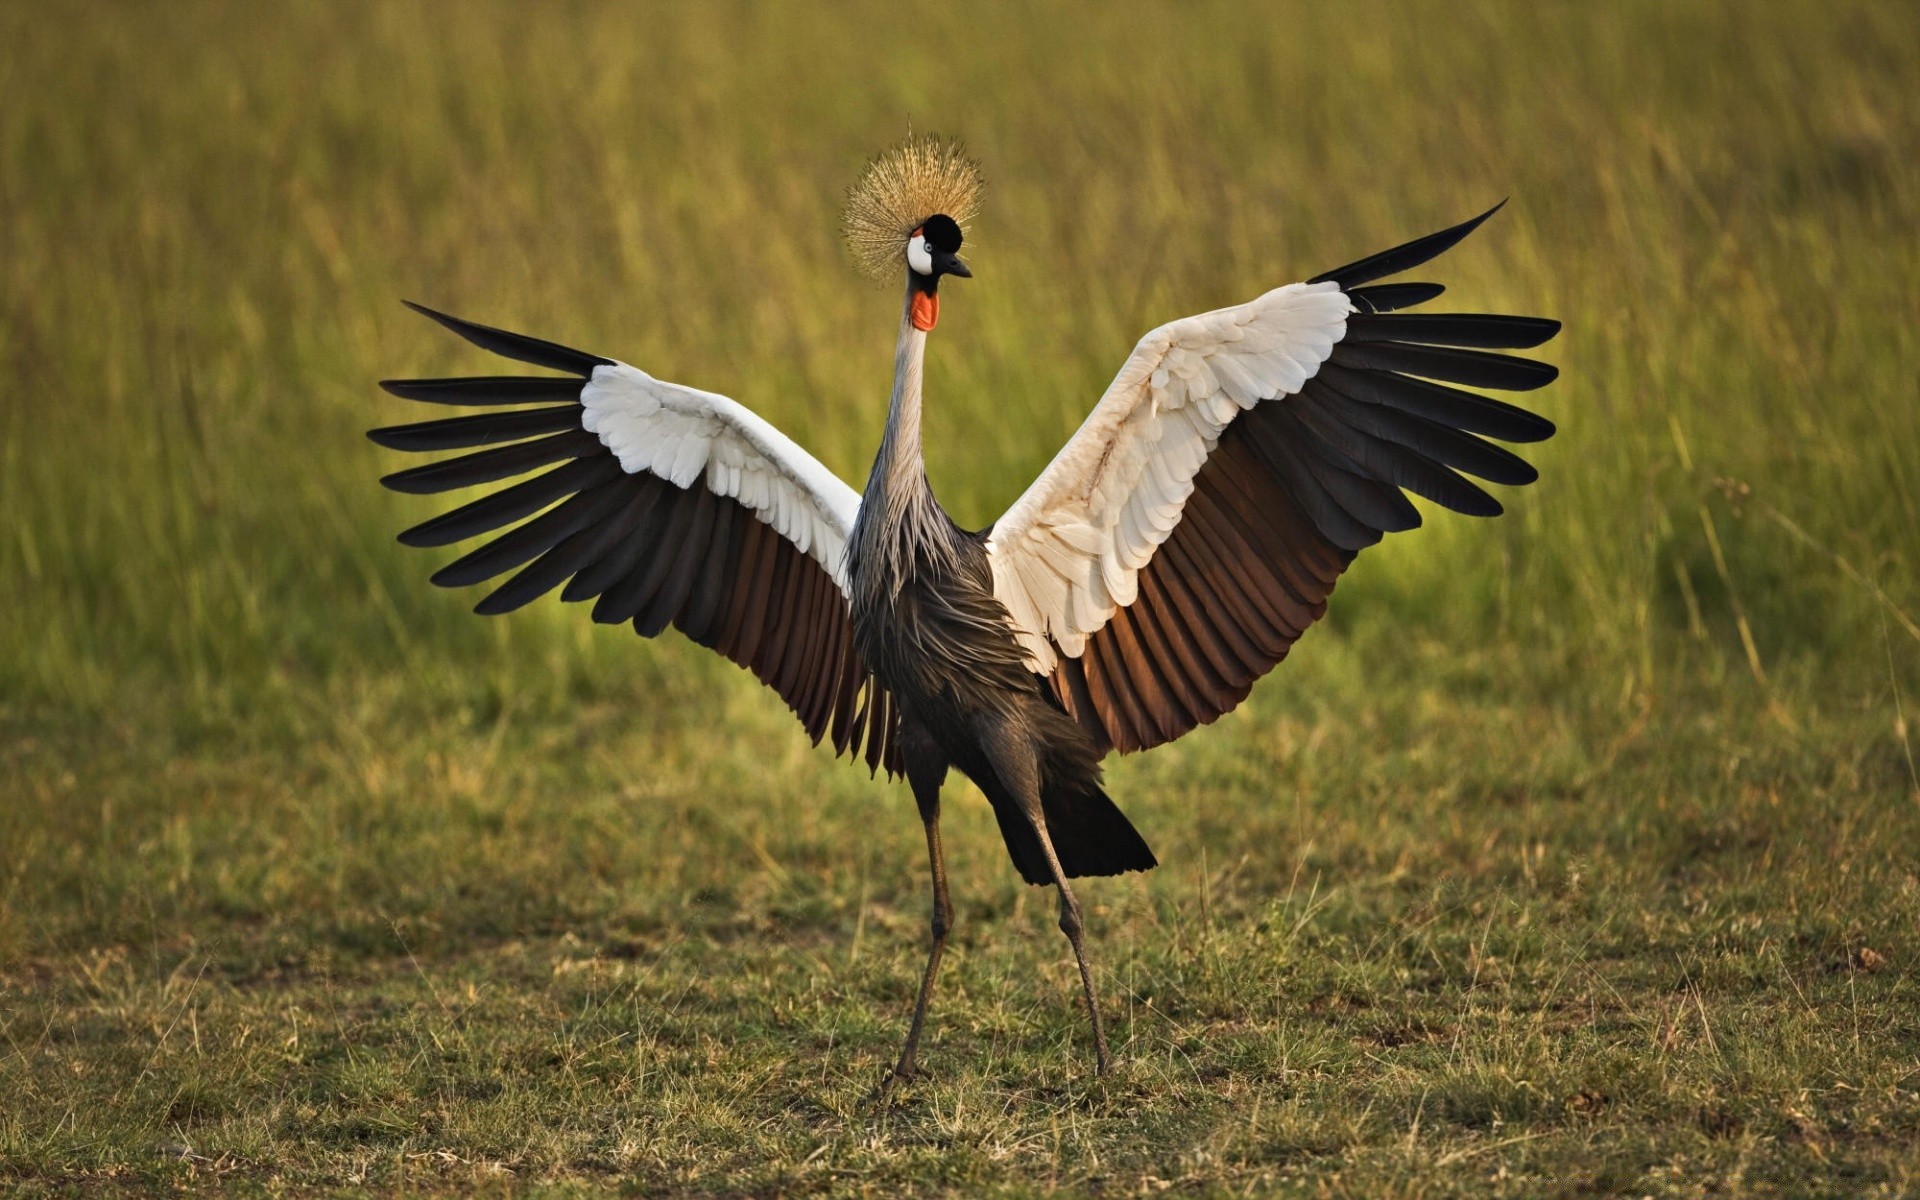 birds bird wildlife crane animal feather nature beak flight wild avian grass stork wing